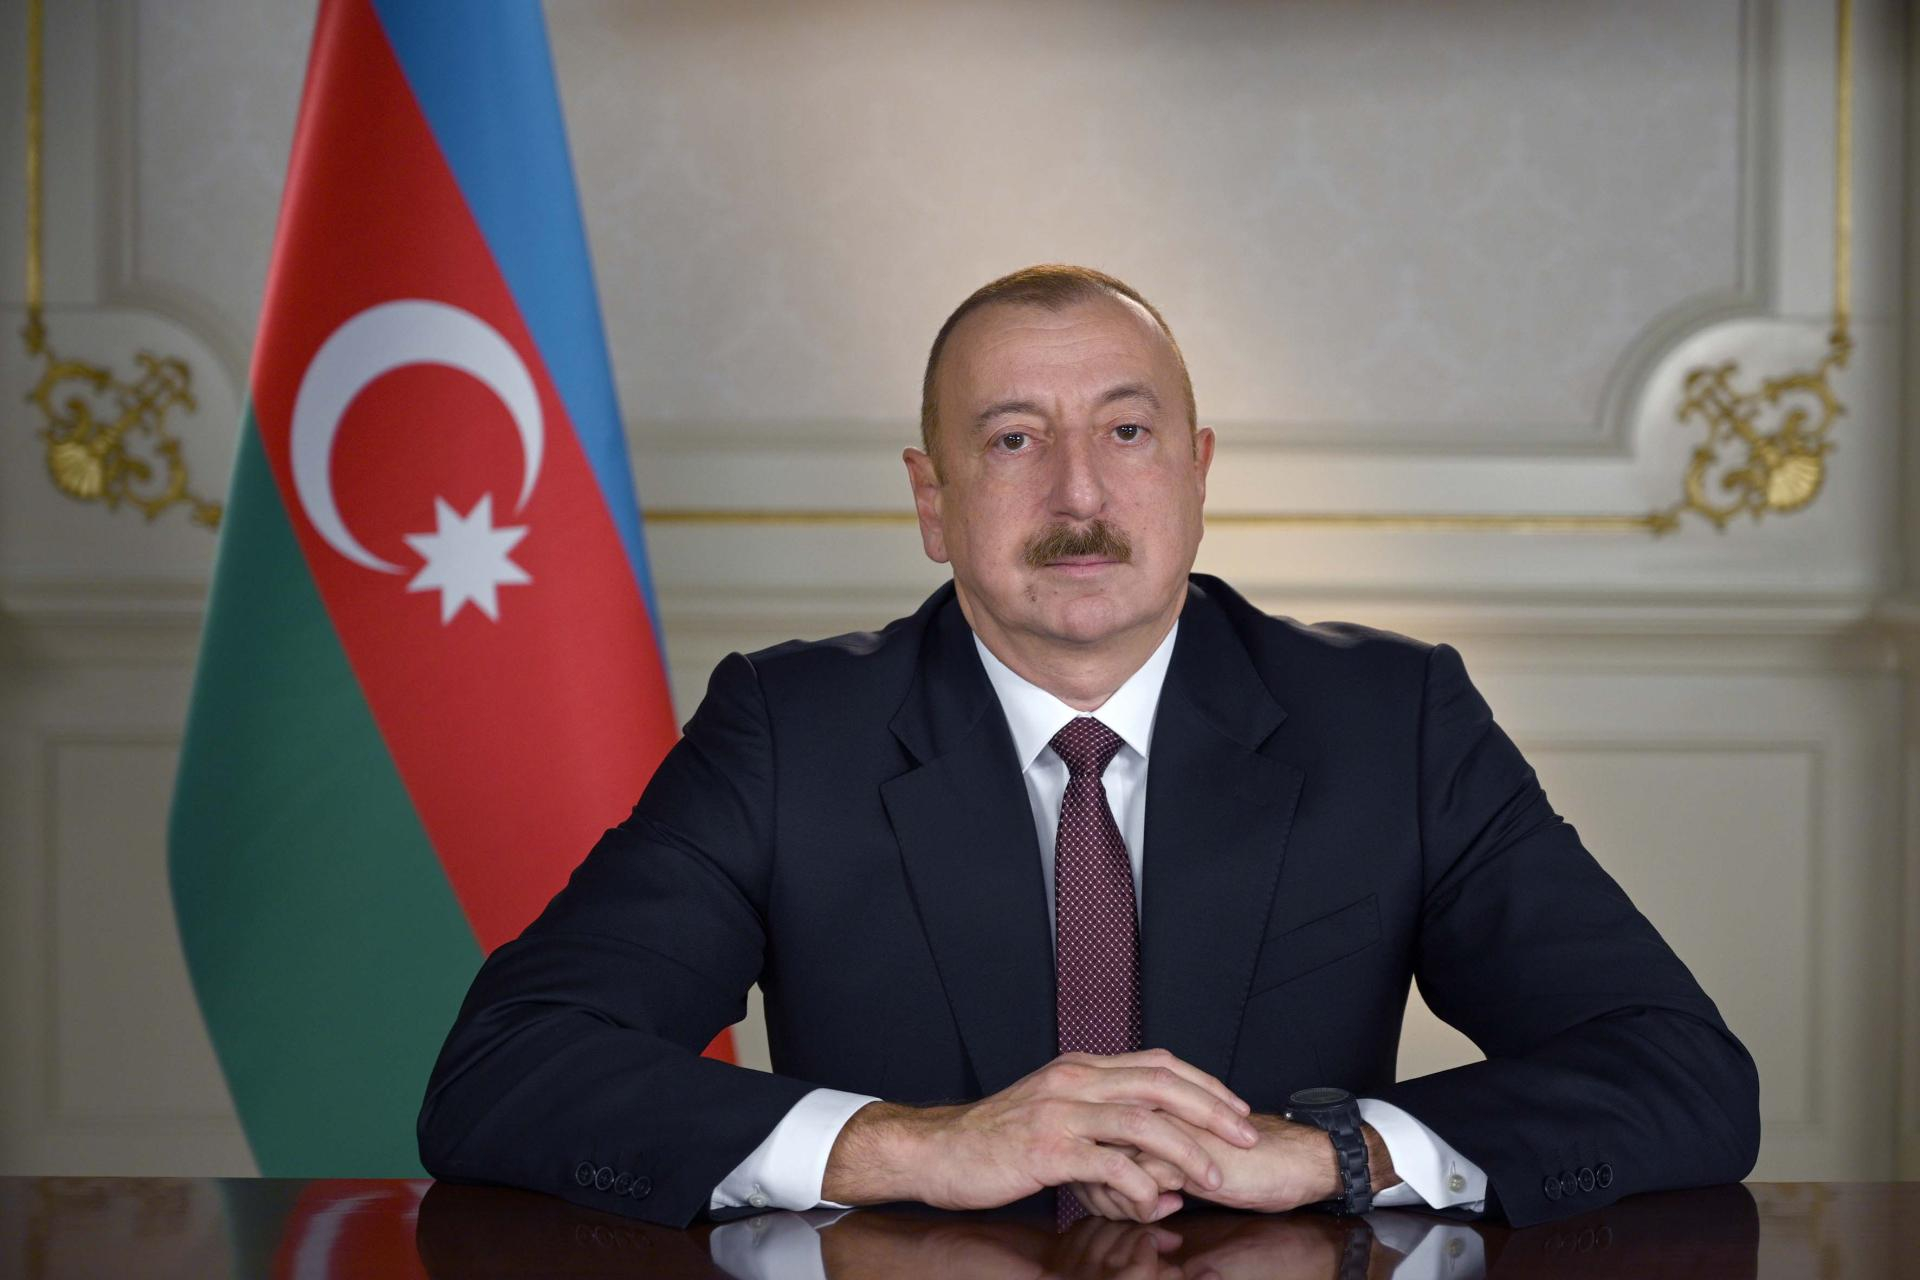 Ильхам Алиев направил письмо Реджепу Тайипу Эрдогану